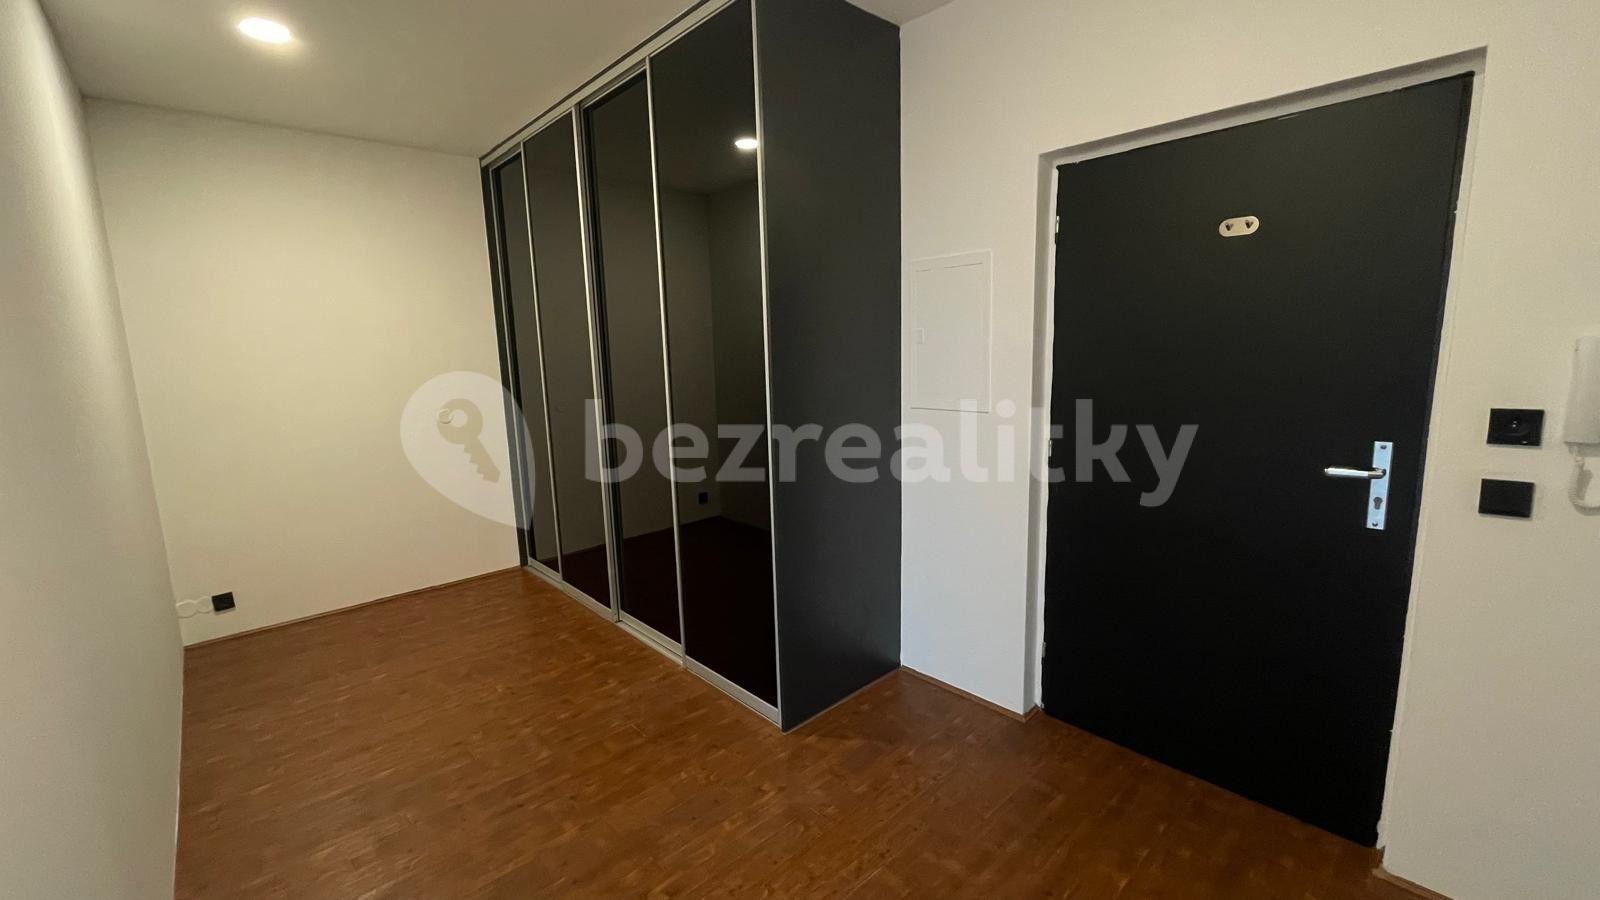 Prenájom bytu 2-izbový 58 m², Do Polí, Kutná Hora, Středočeský kraj